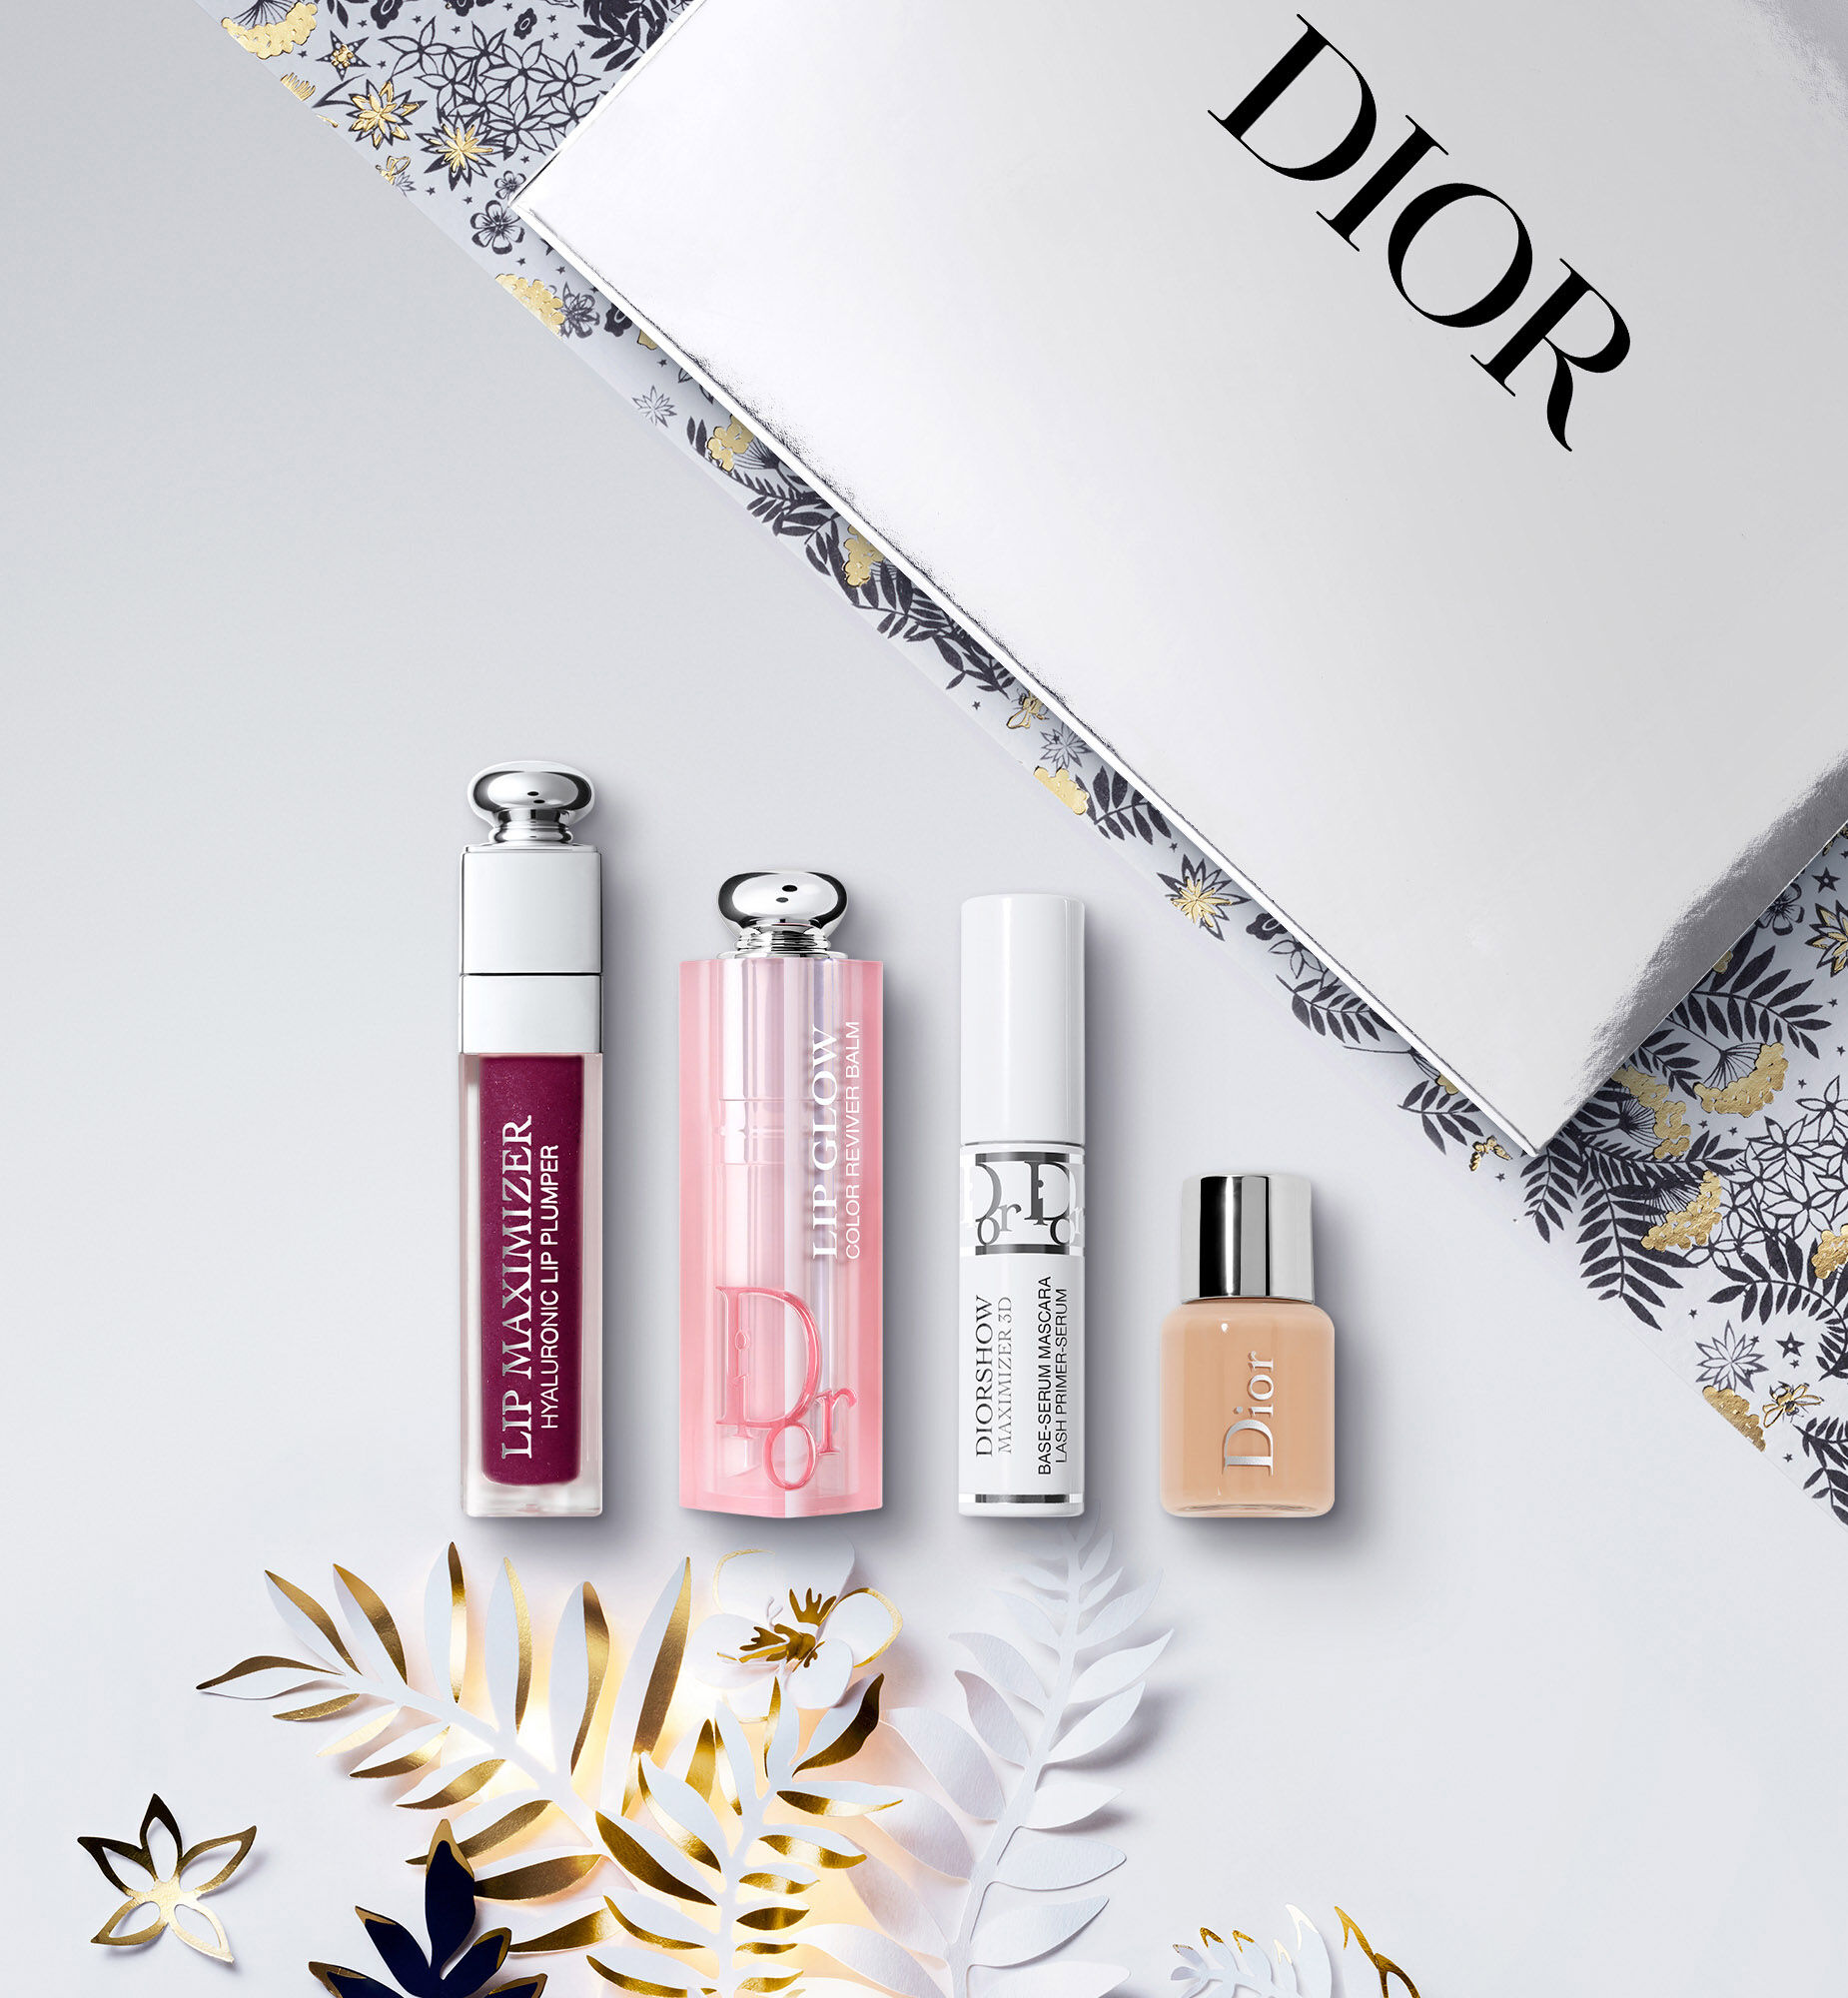 Dior Beauty Online Boutique Singapore  Dior Online Boutique Singapore